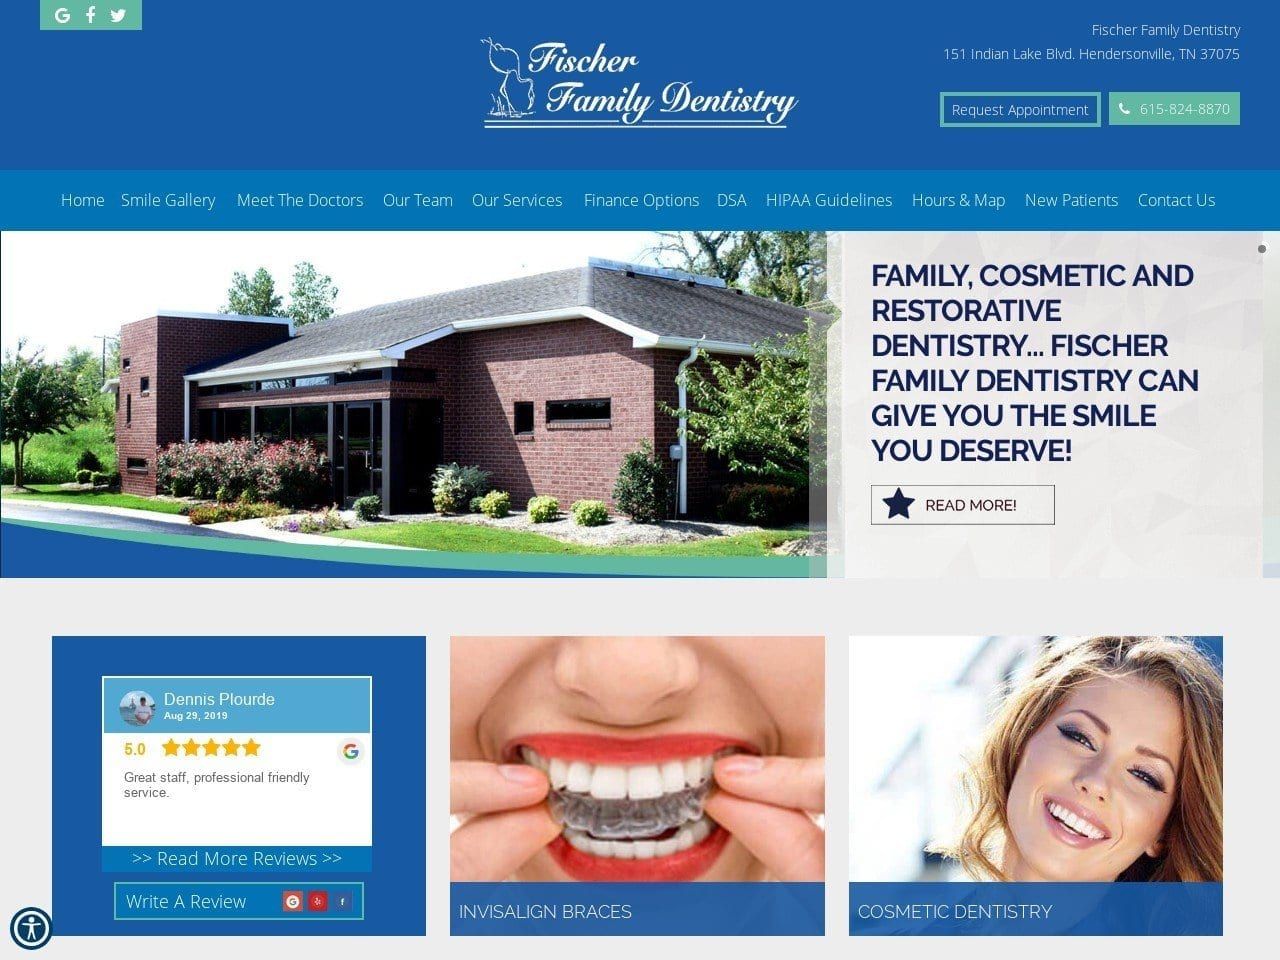 Fischer Family Dentistry Website Screenshot from fischerfamilydentistry.com